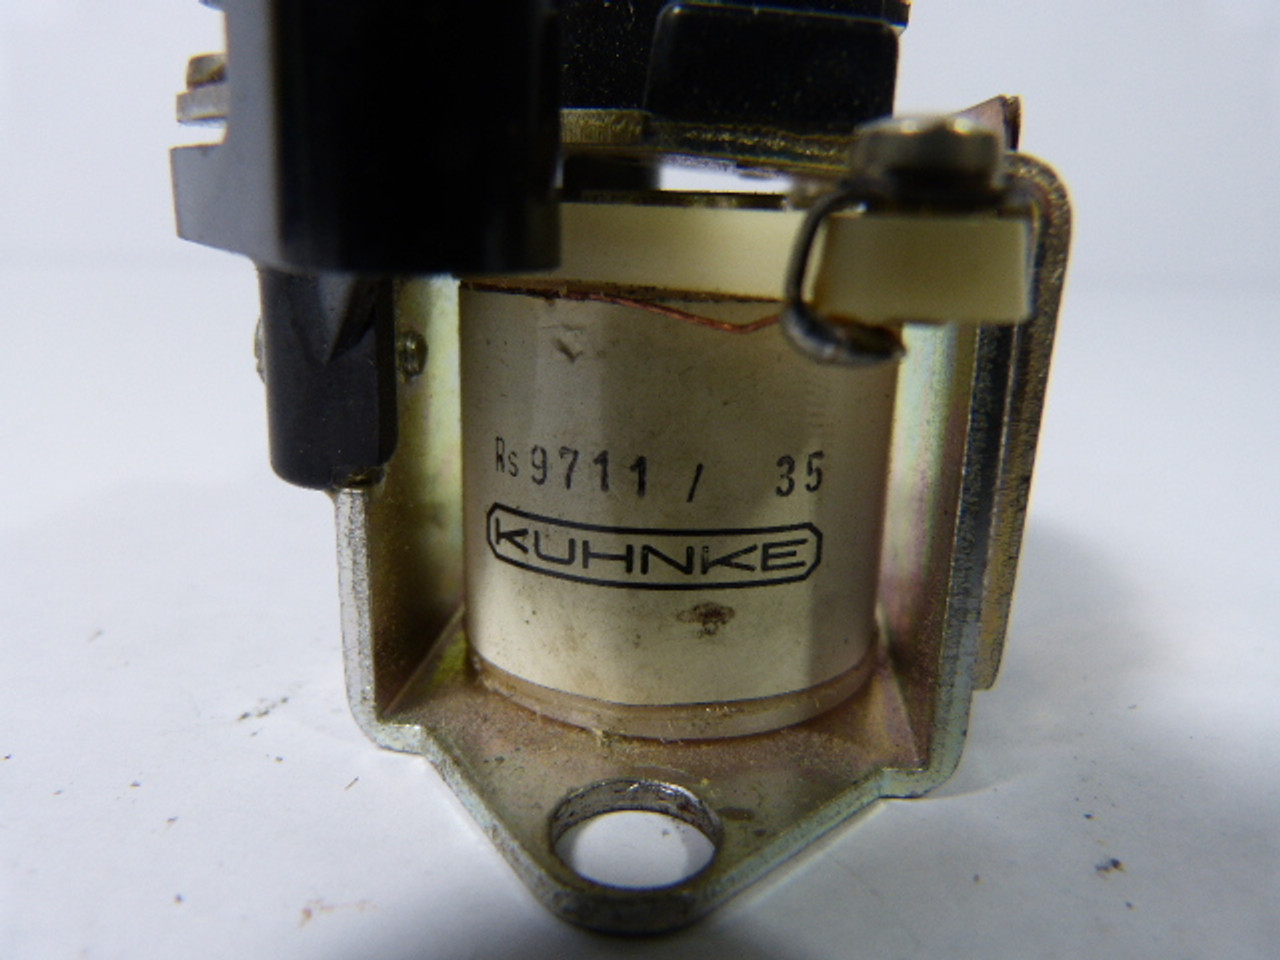 Kuhnke RS-9711/35 Power Relay USED